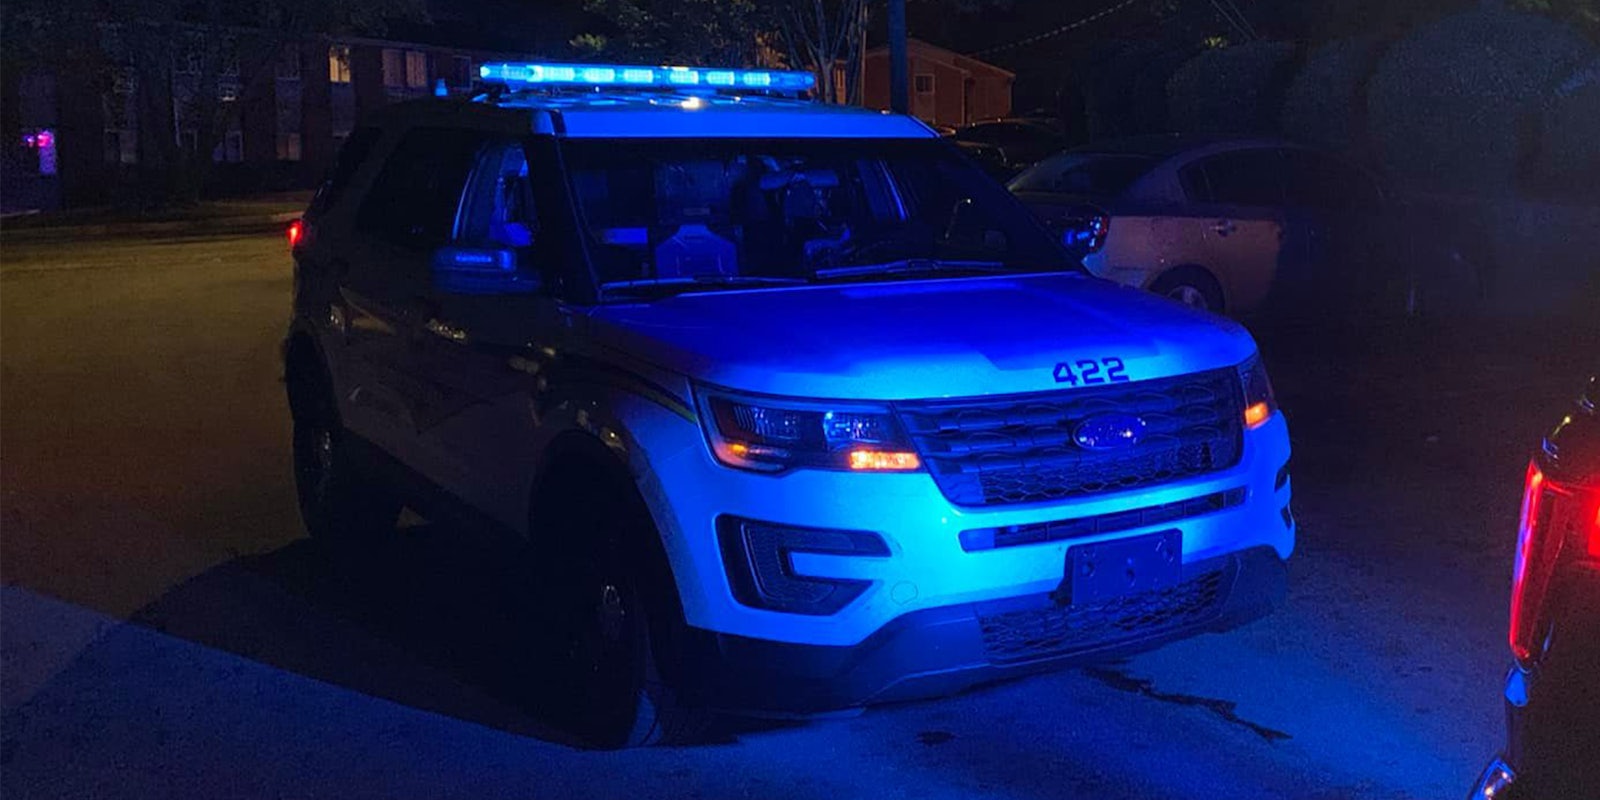 birmingham police car at night